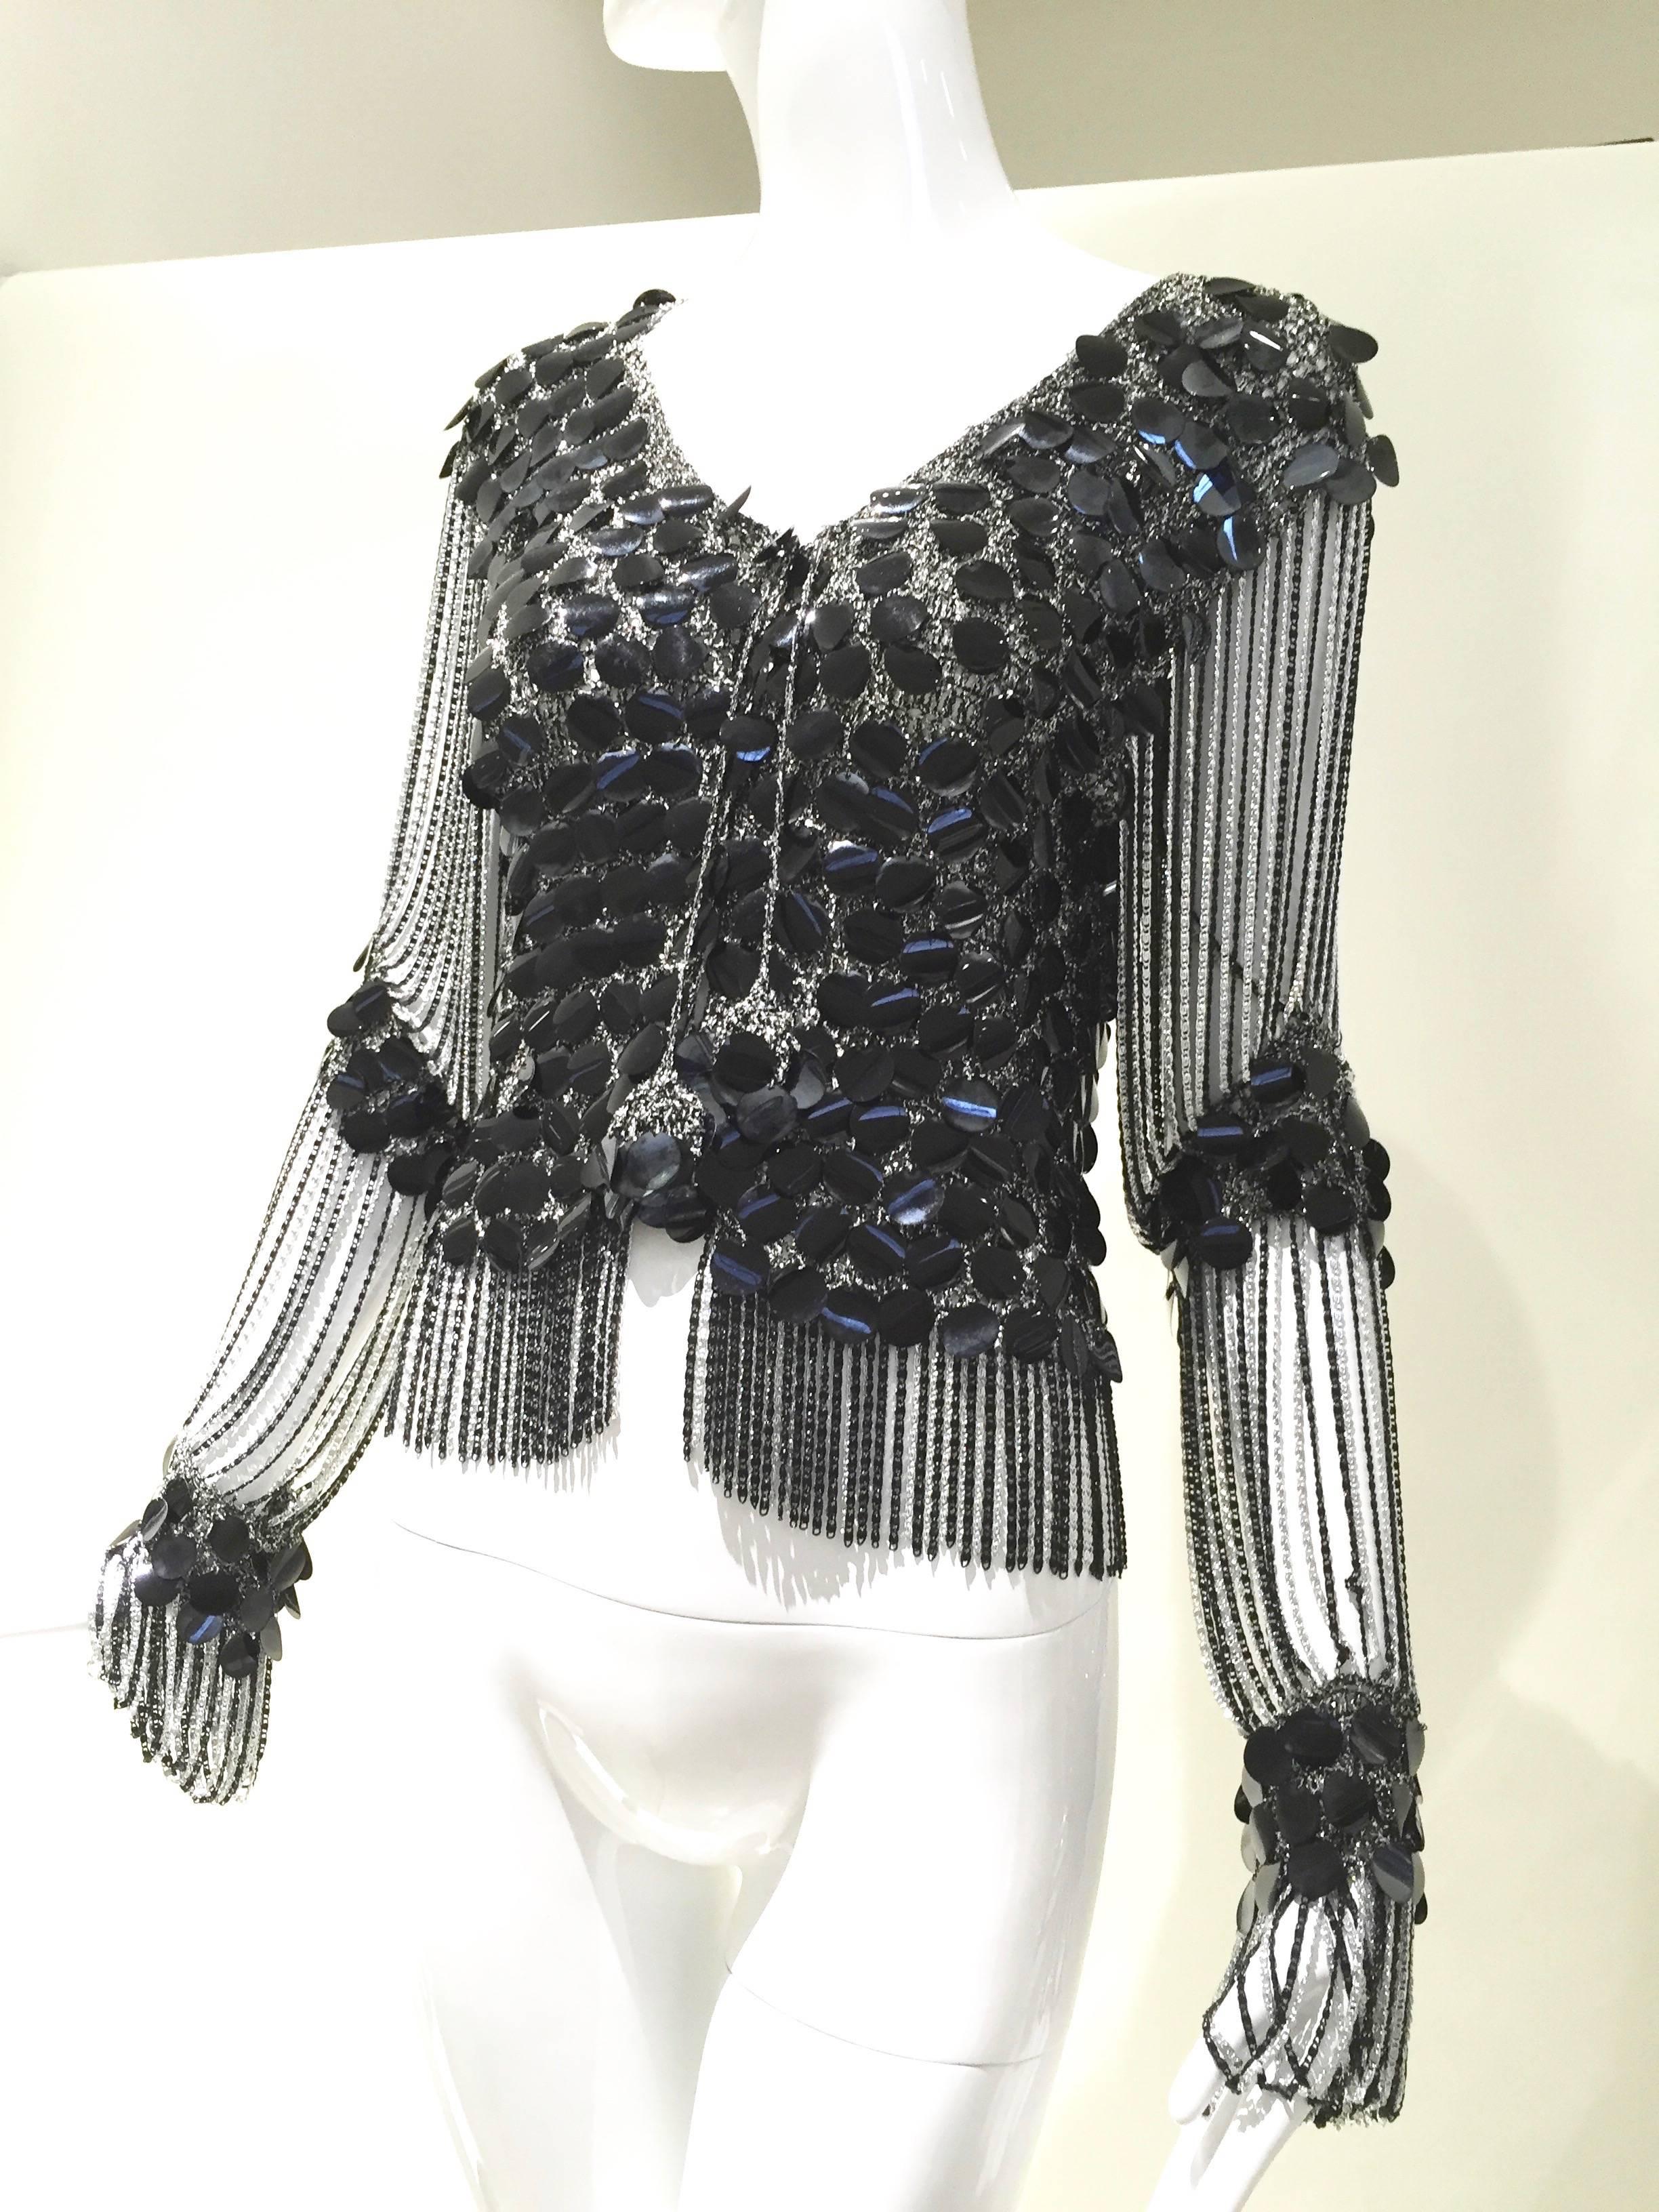 1970s LORIS AZZARO black tassel chain mail and sequin pailette knit cardigan.
Bust : 34